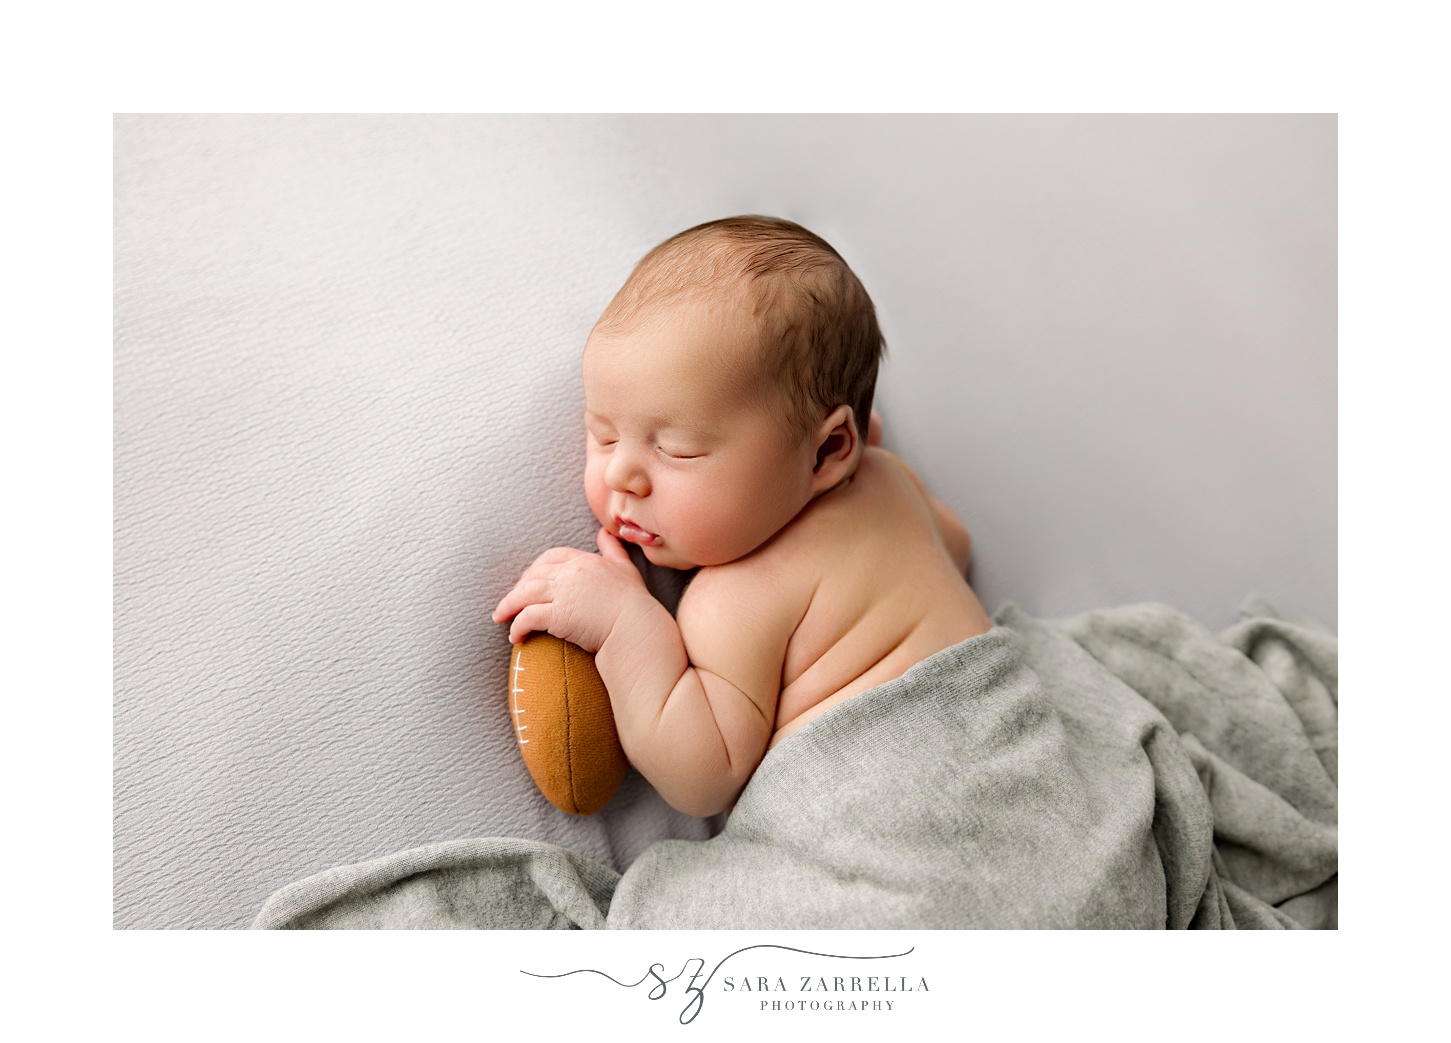 baby sleeps holding football during newborn session with Rhode Island newborn and family photographer Sara Zarrella Photography